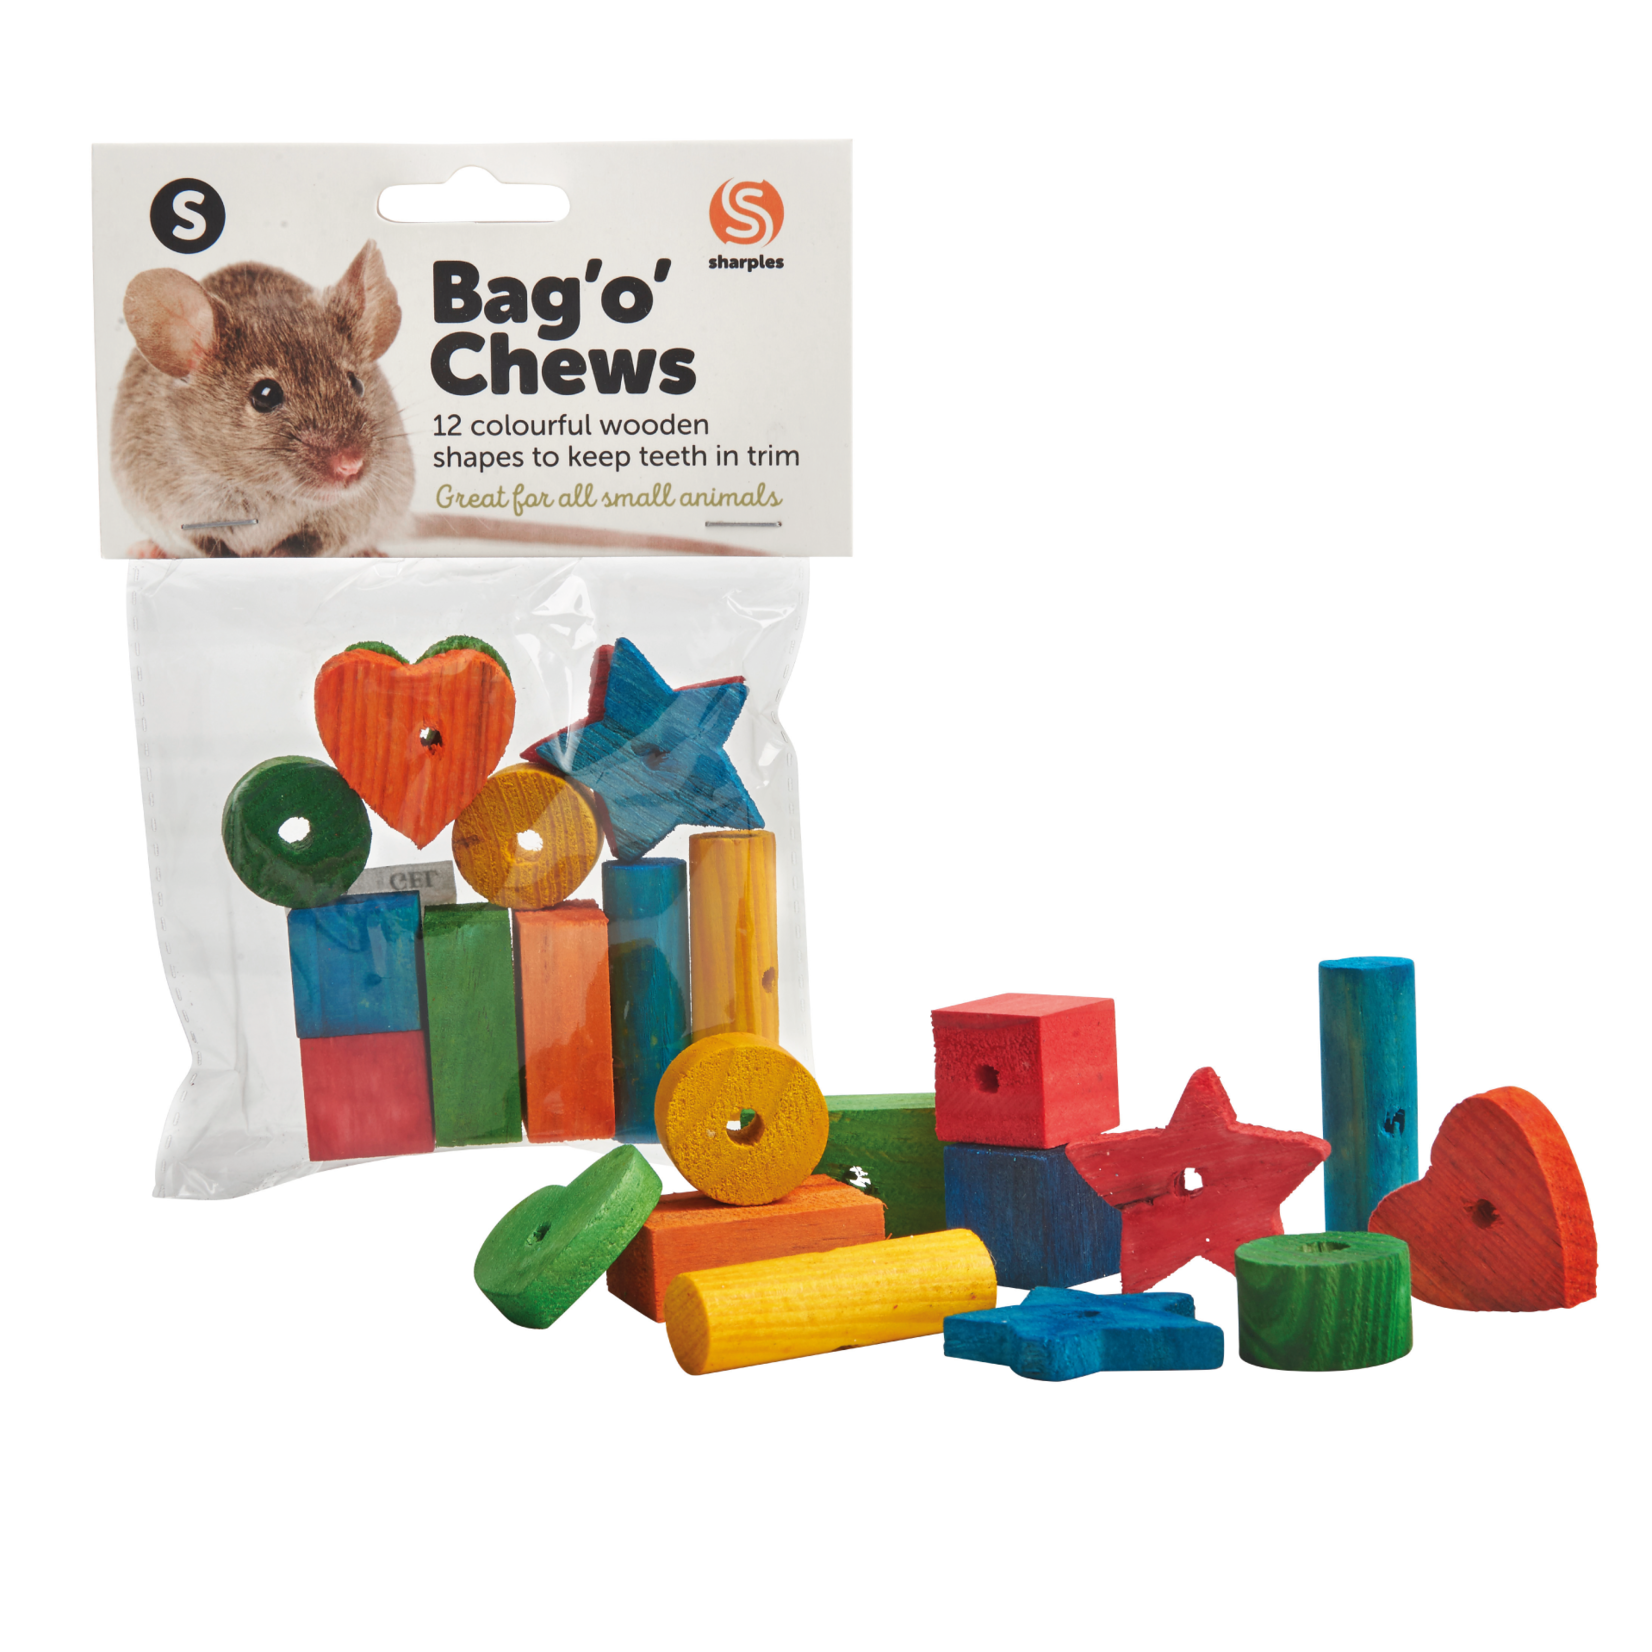 sharples Small 'n' Furry Bag 'o' Chews Small Animal Toys, 12 pack